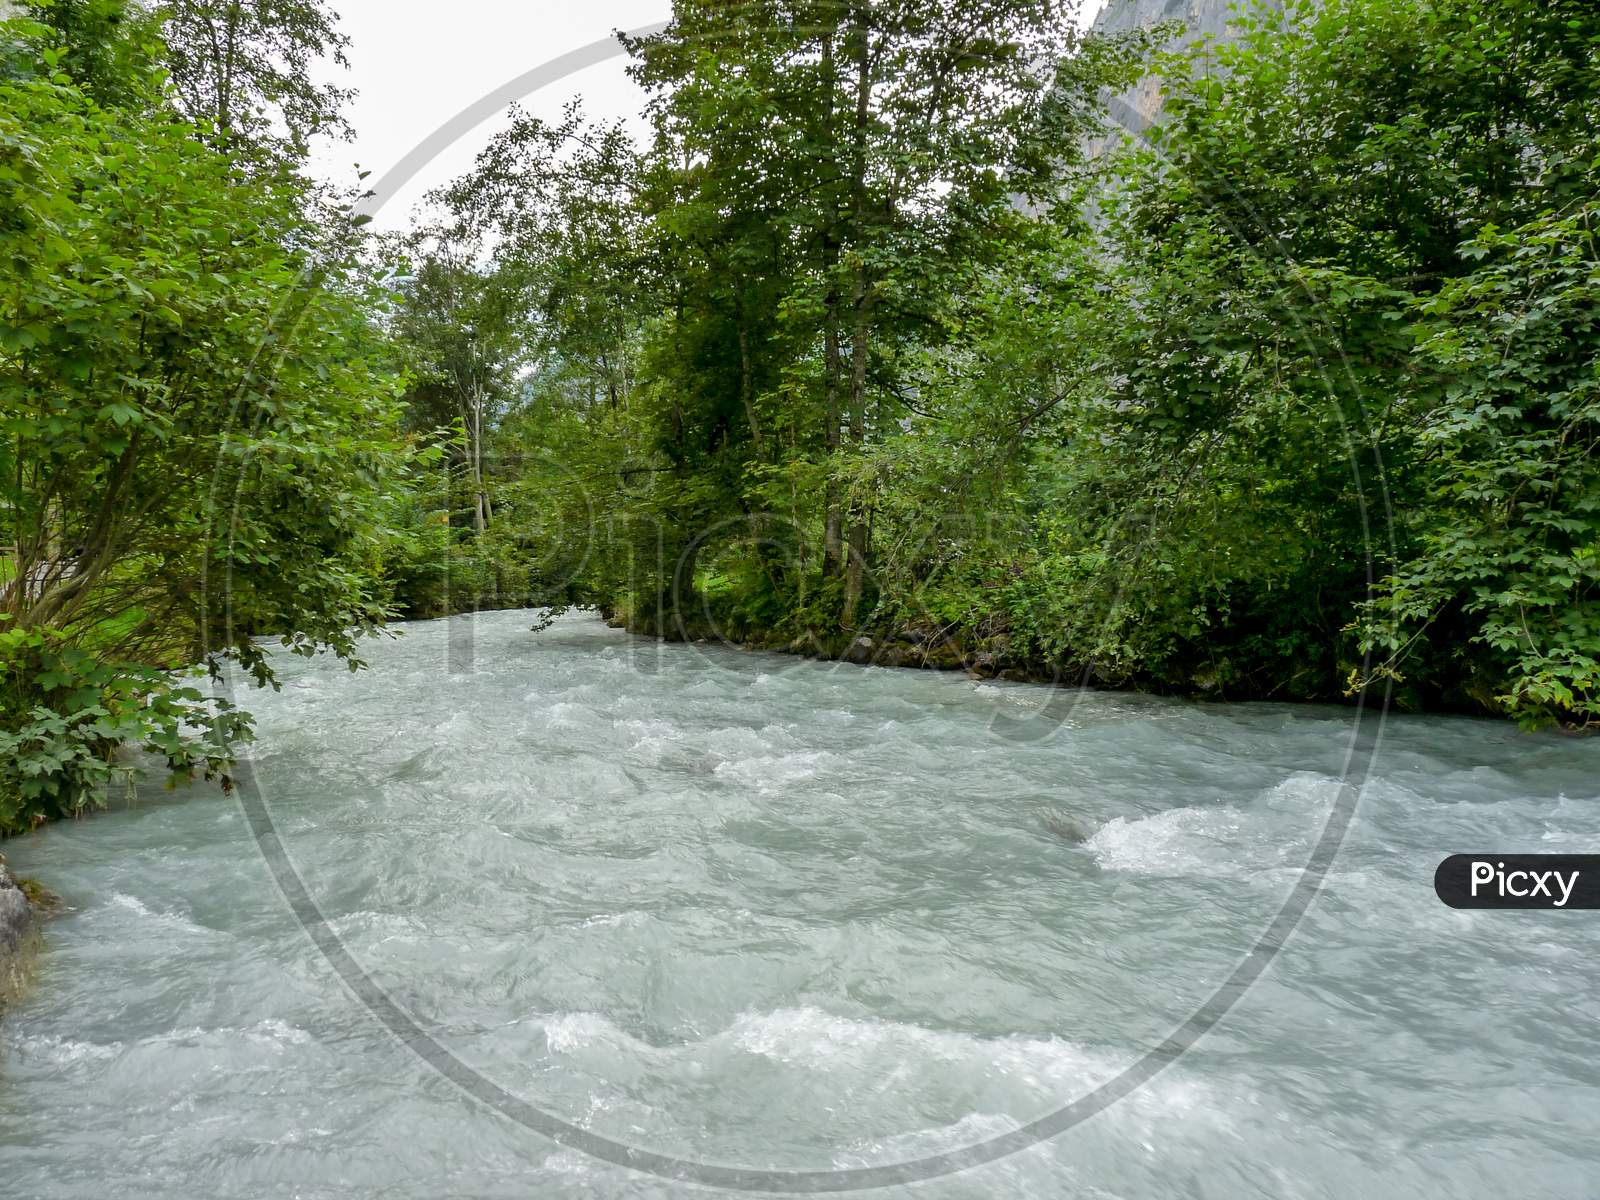 Switzerland, Lauterbrunnen, River Flowing Amidst Trees In Forest